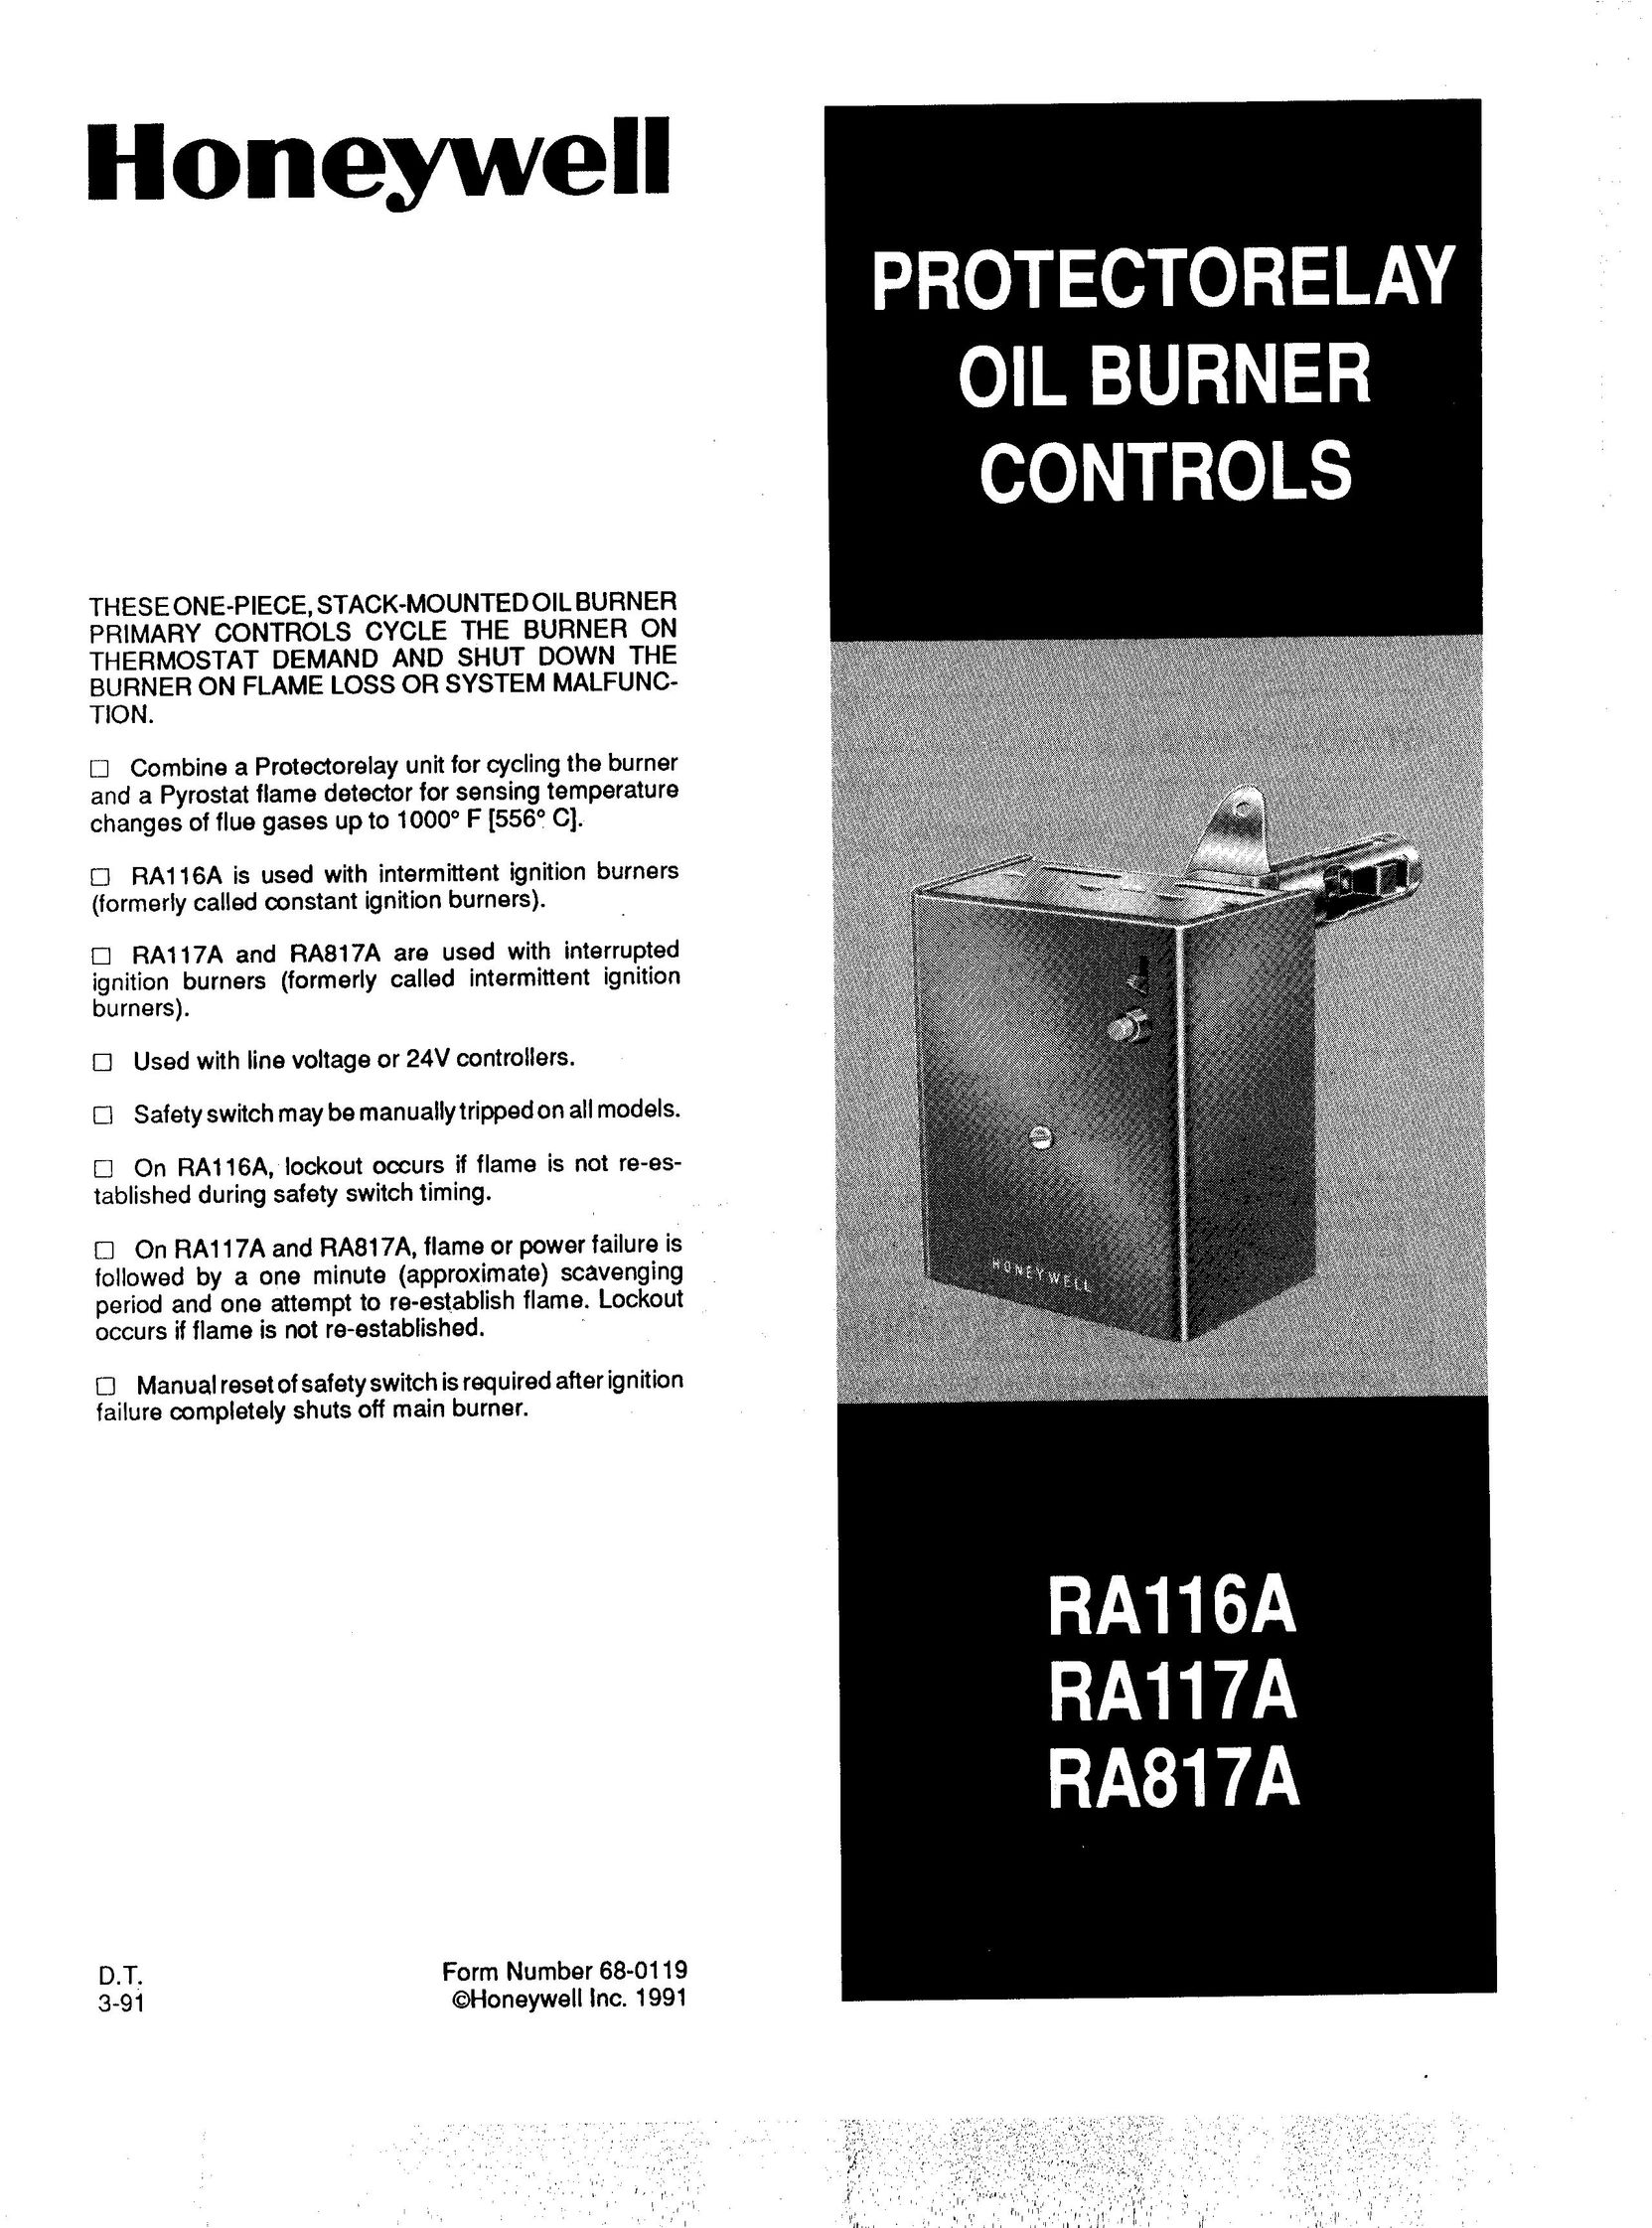 Honeywell RA817A Burner User Manual